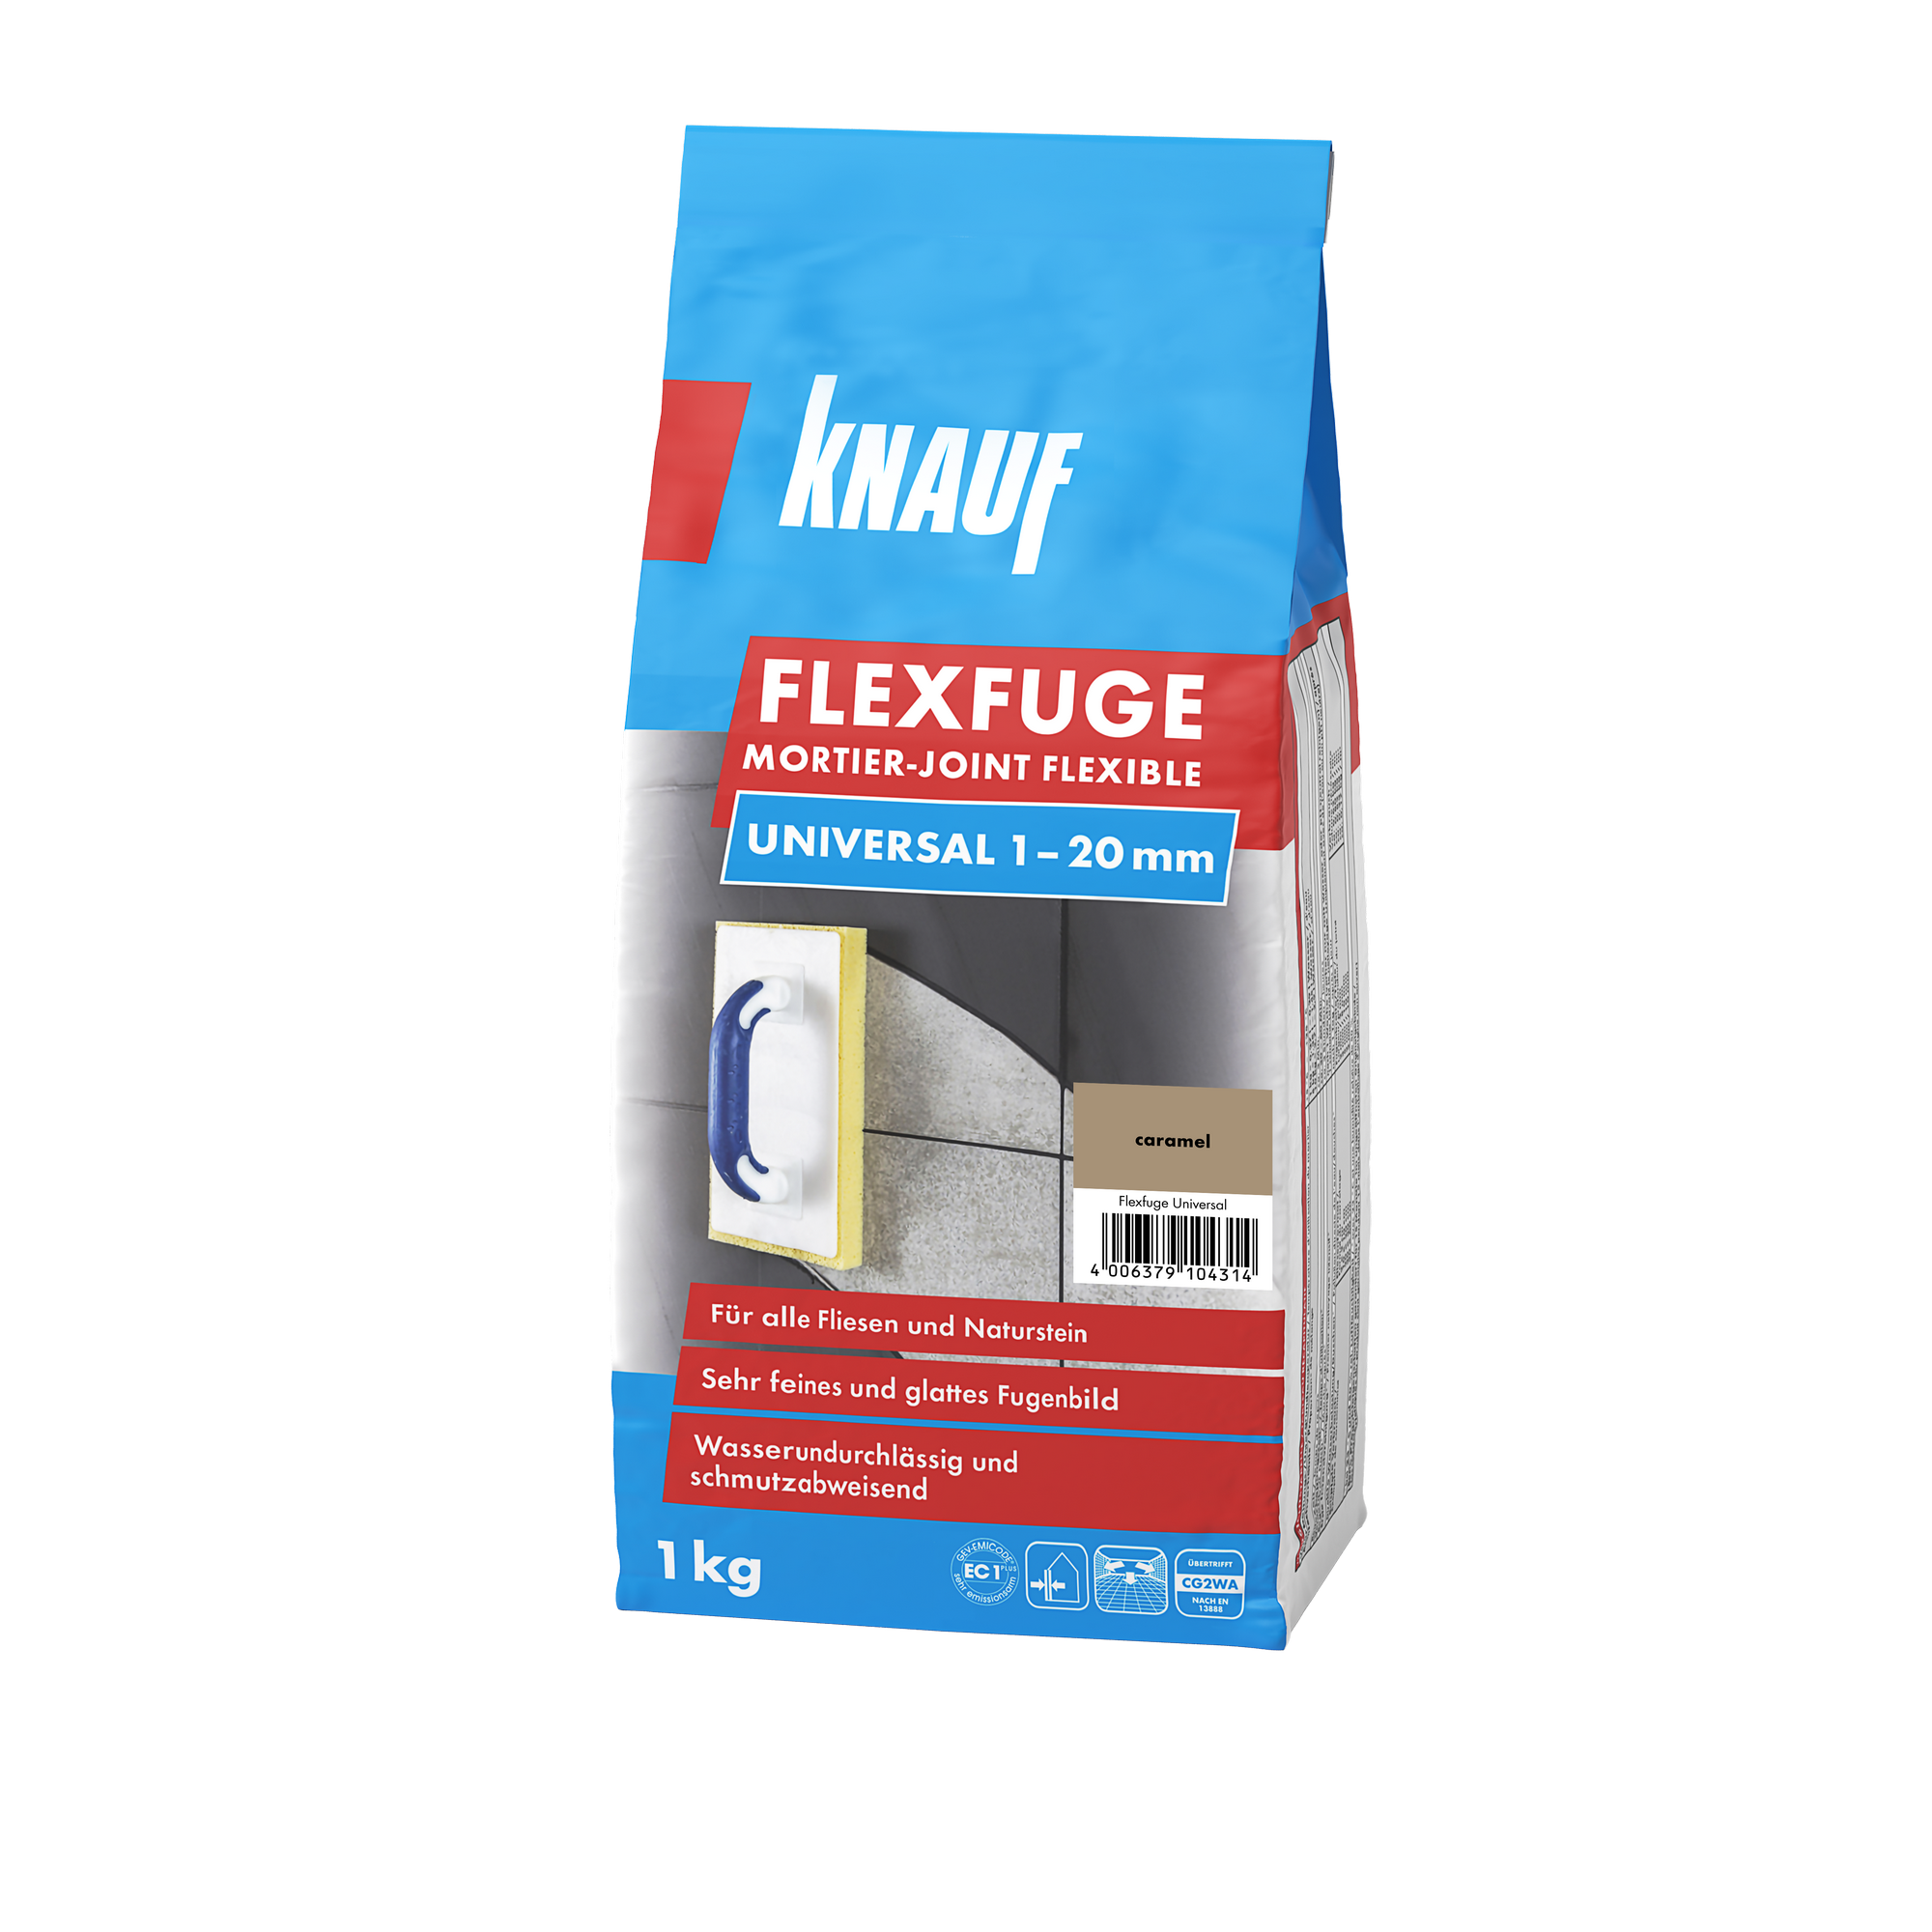 Flexfuge 'Universal' caramel 1 kg + product picture